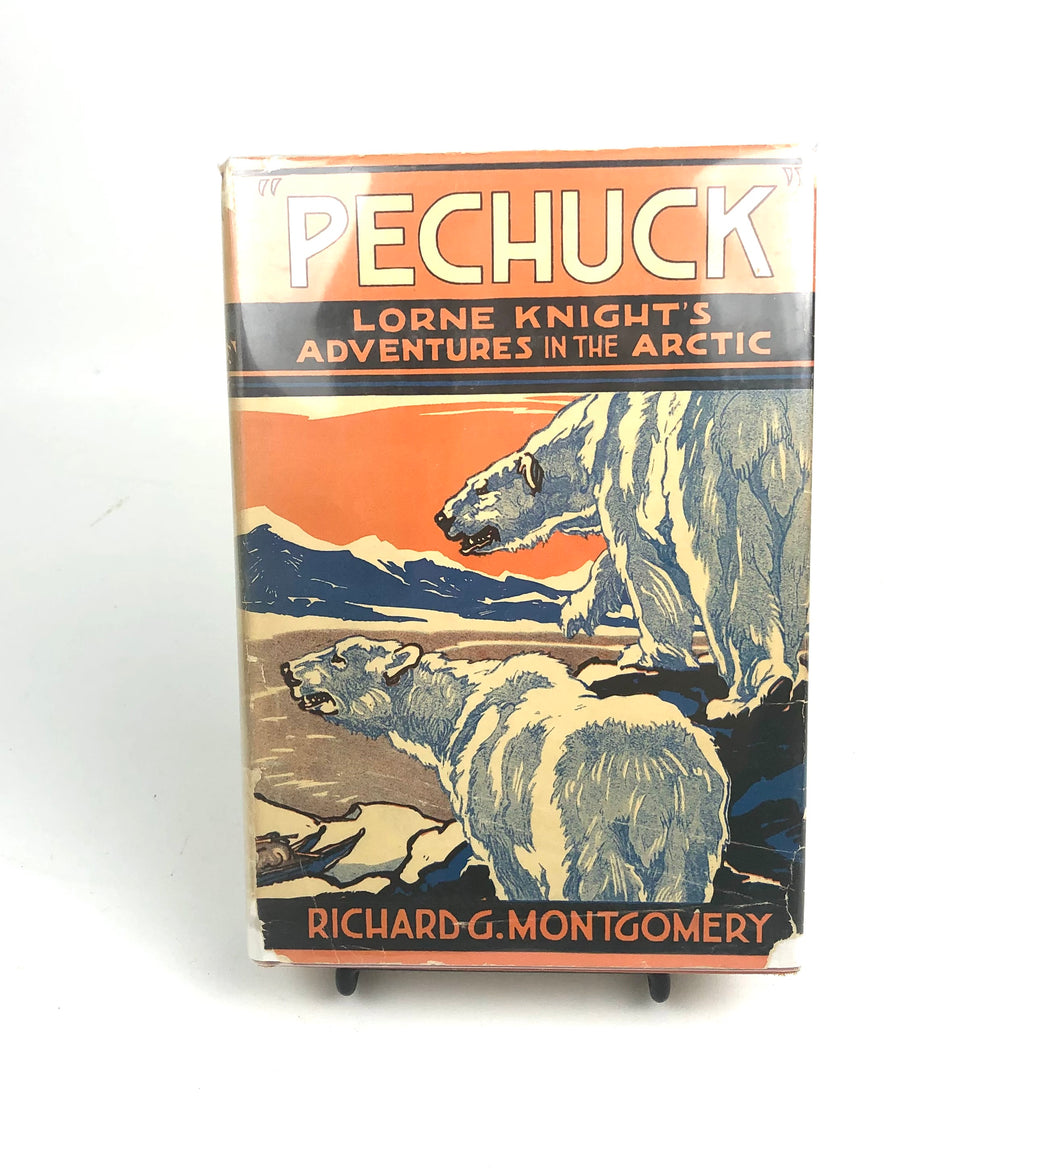 Pechuck: Lorne Knight's Adventures in the Arctic - Richard G. Montgomery